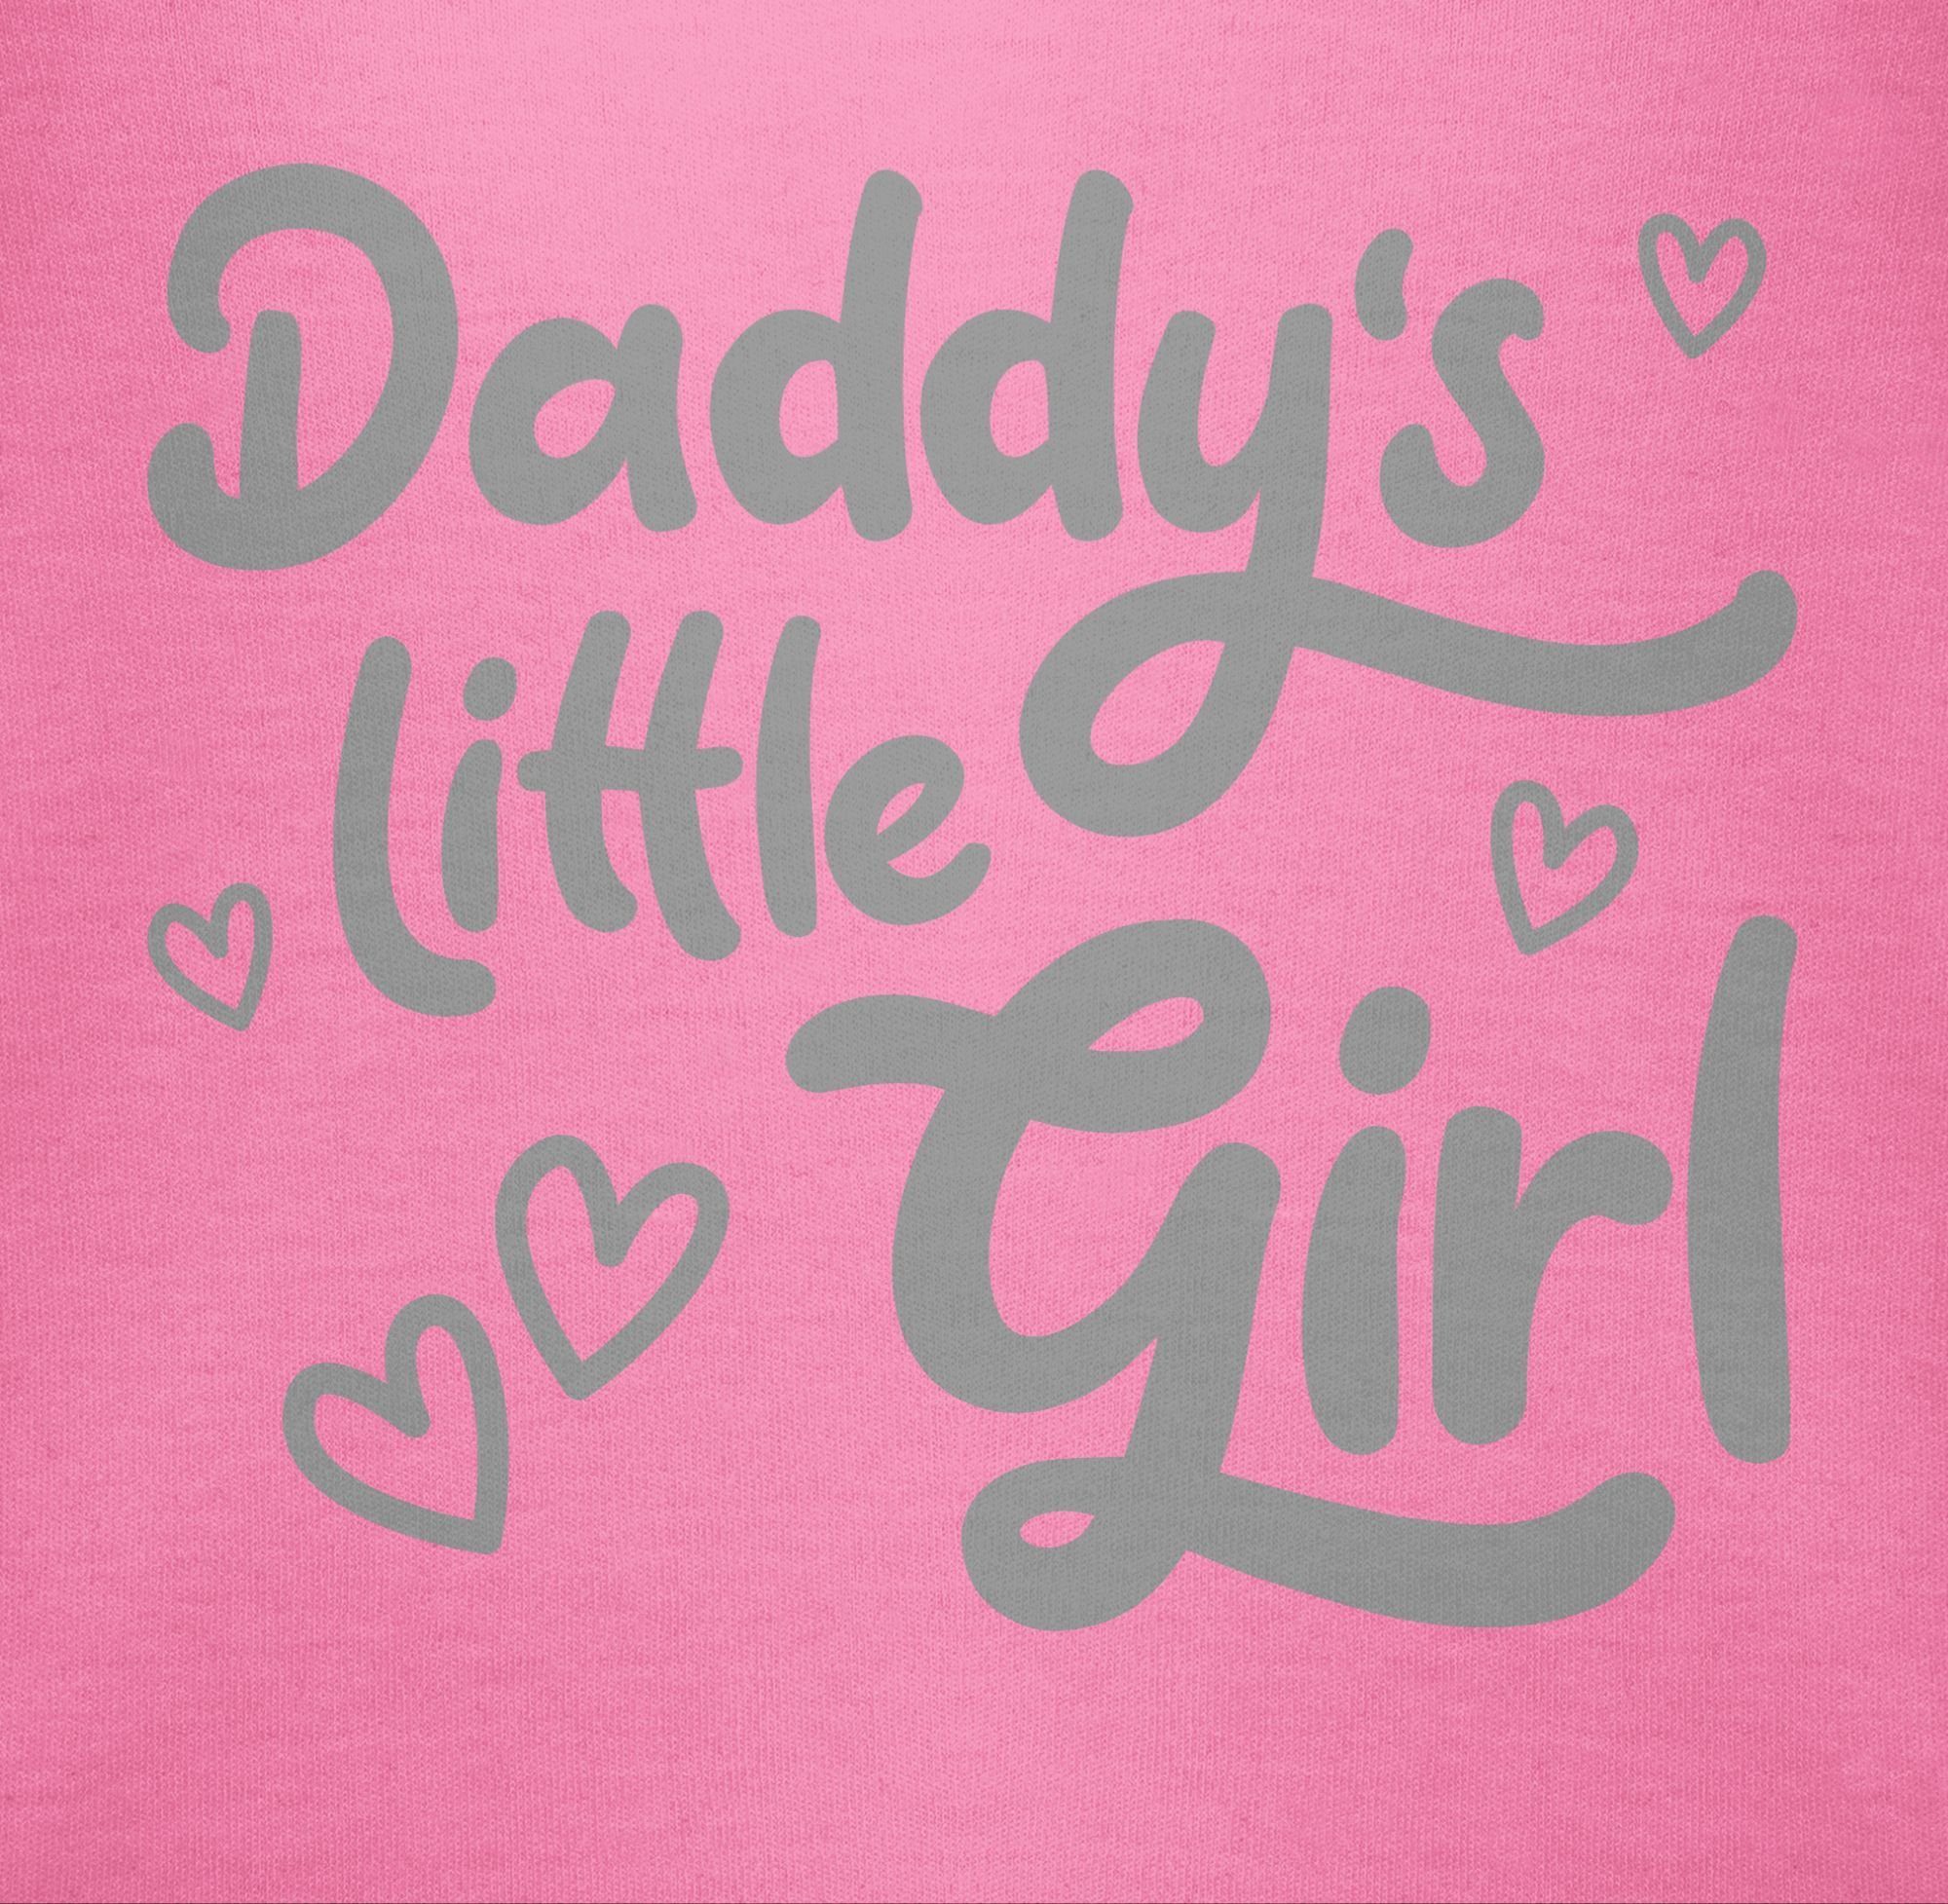 Geschenk Shirtbody Girl Daddy's little grau Shirtracer Vatertag Pink süß Baby 2